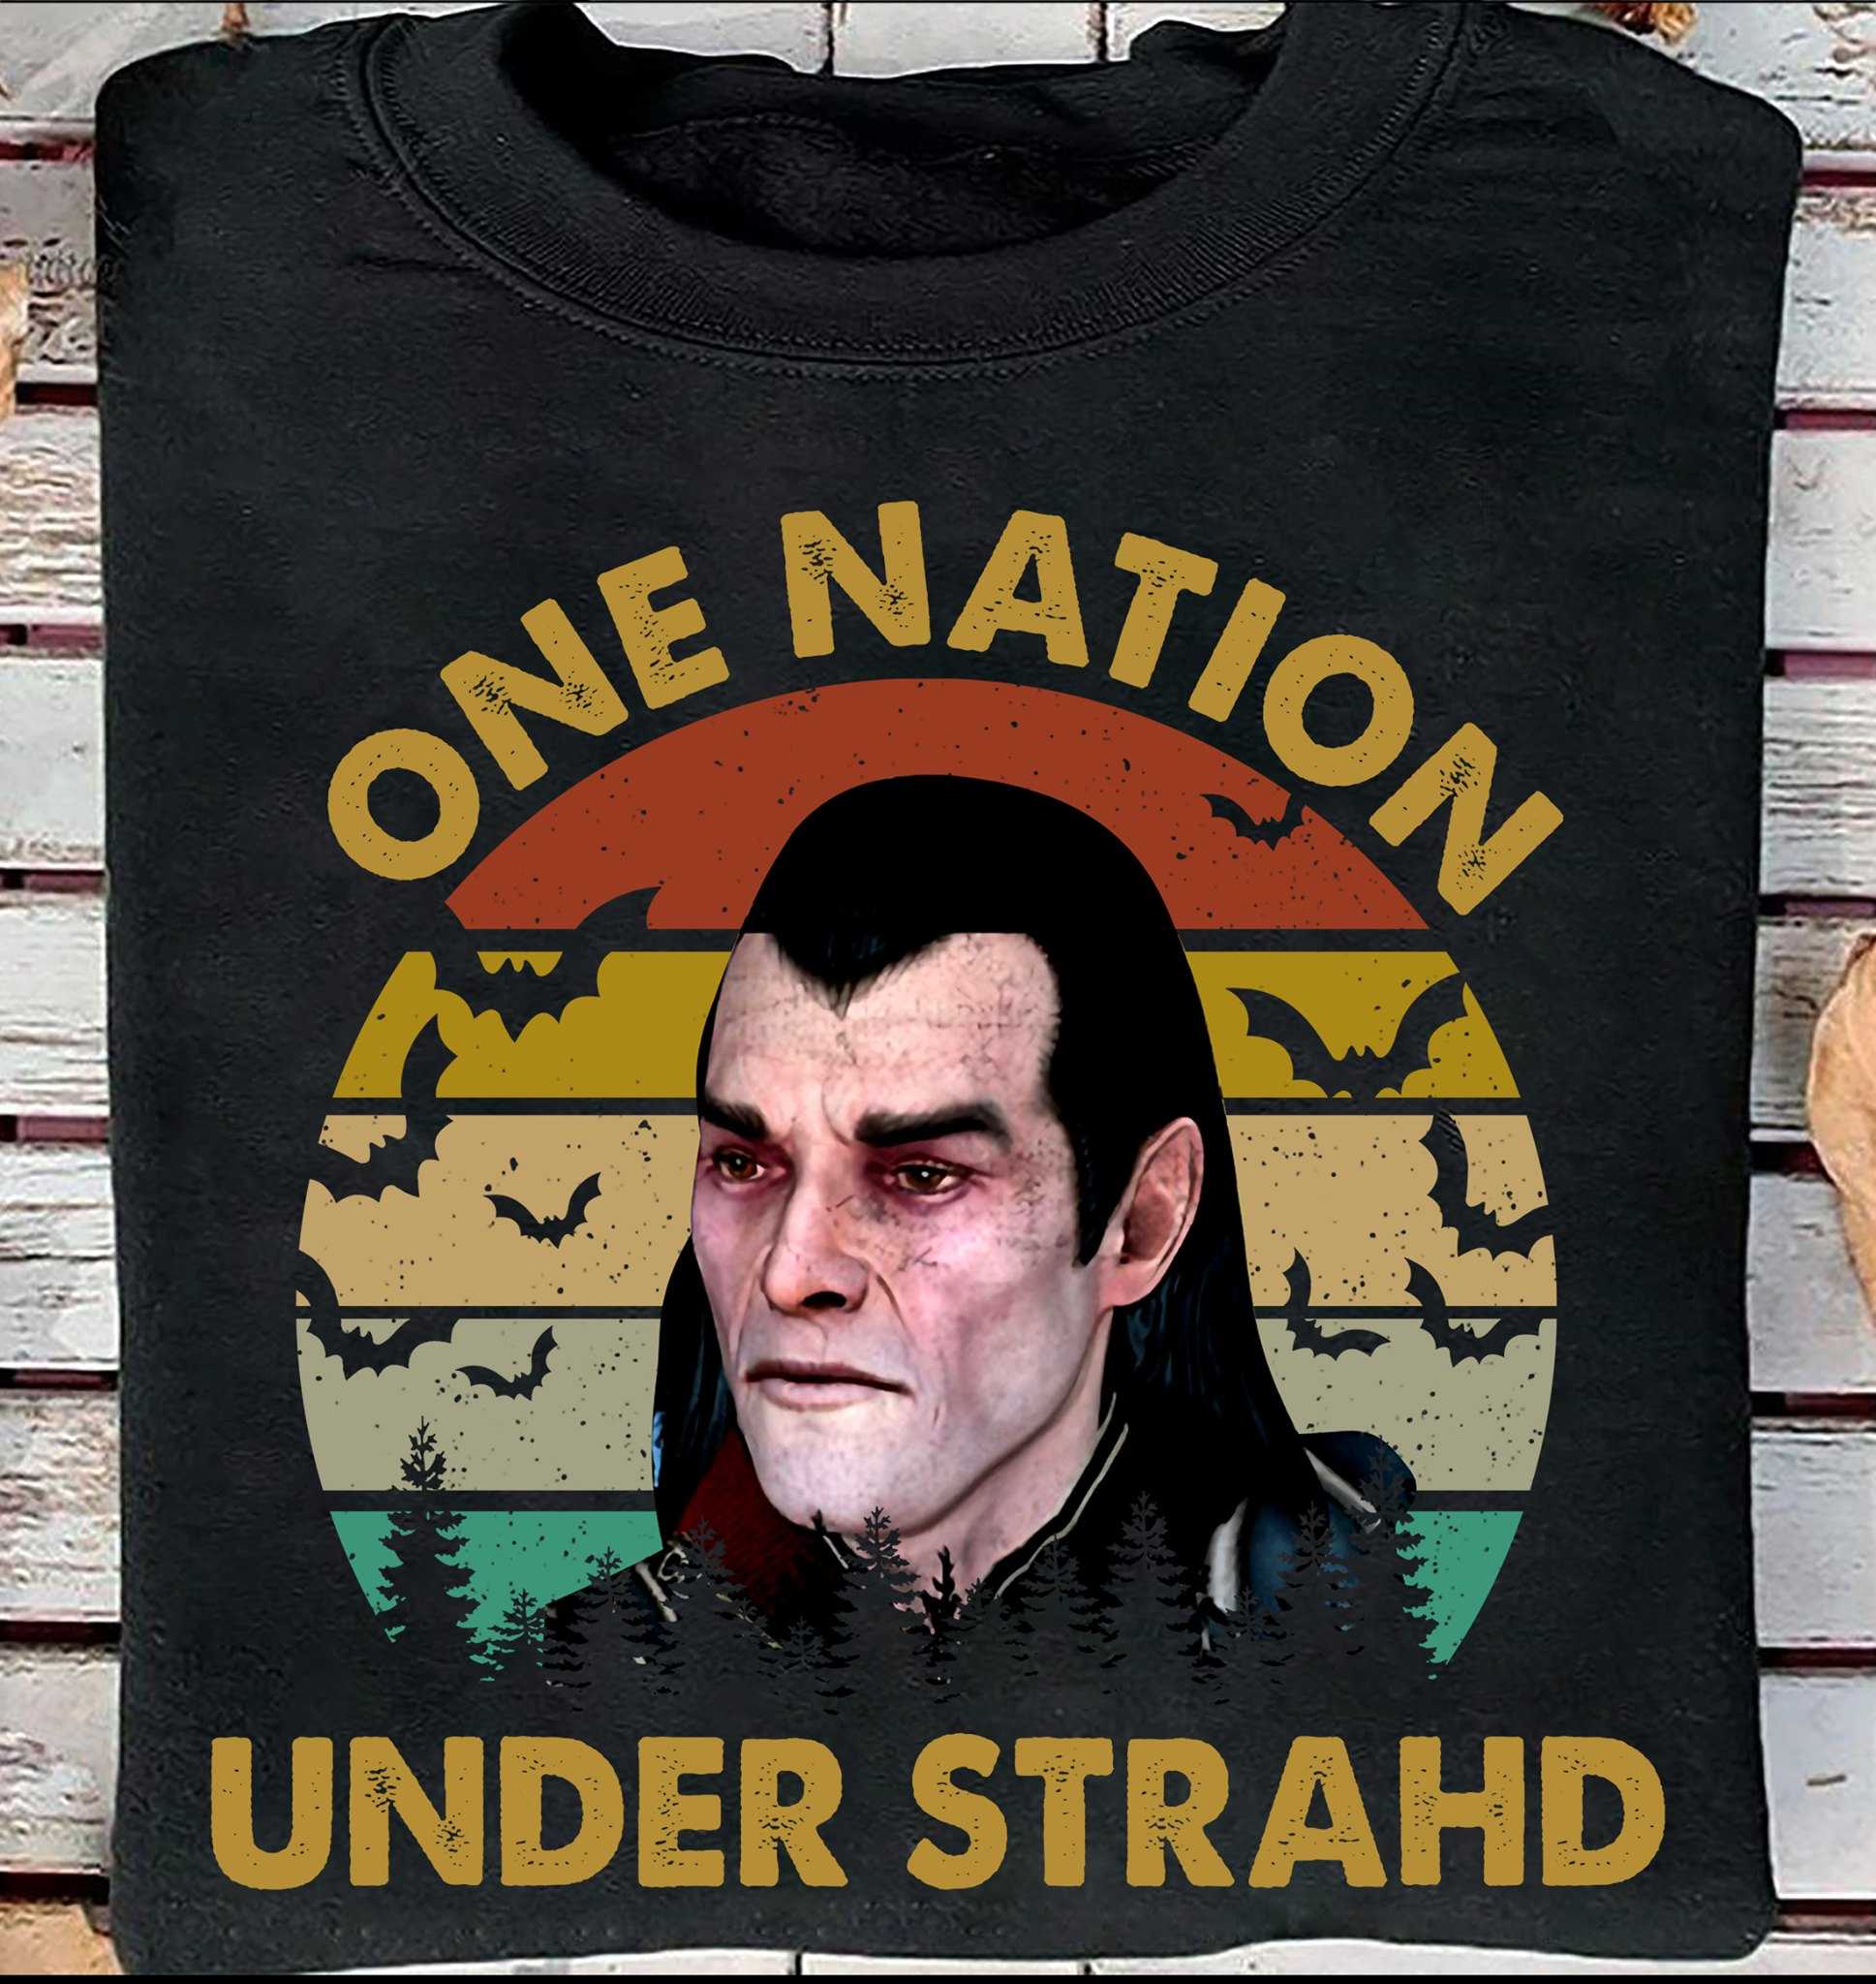 Bat Dracula - One nation under strahd